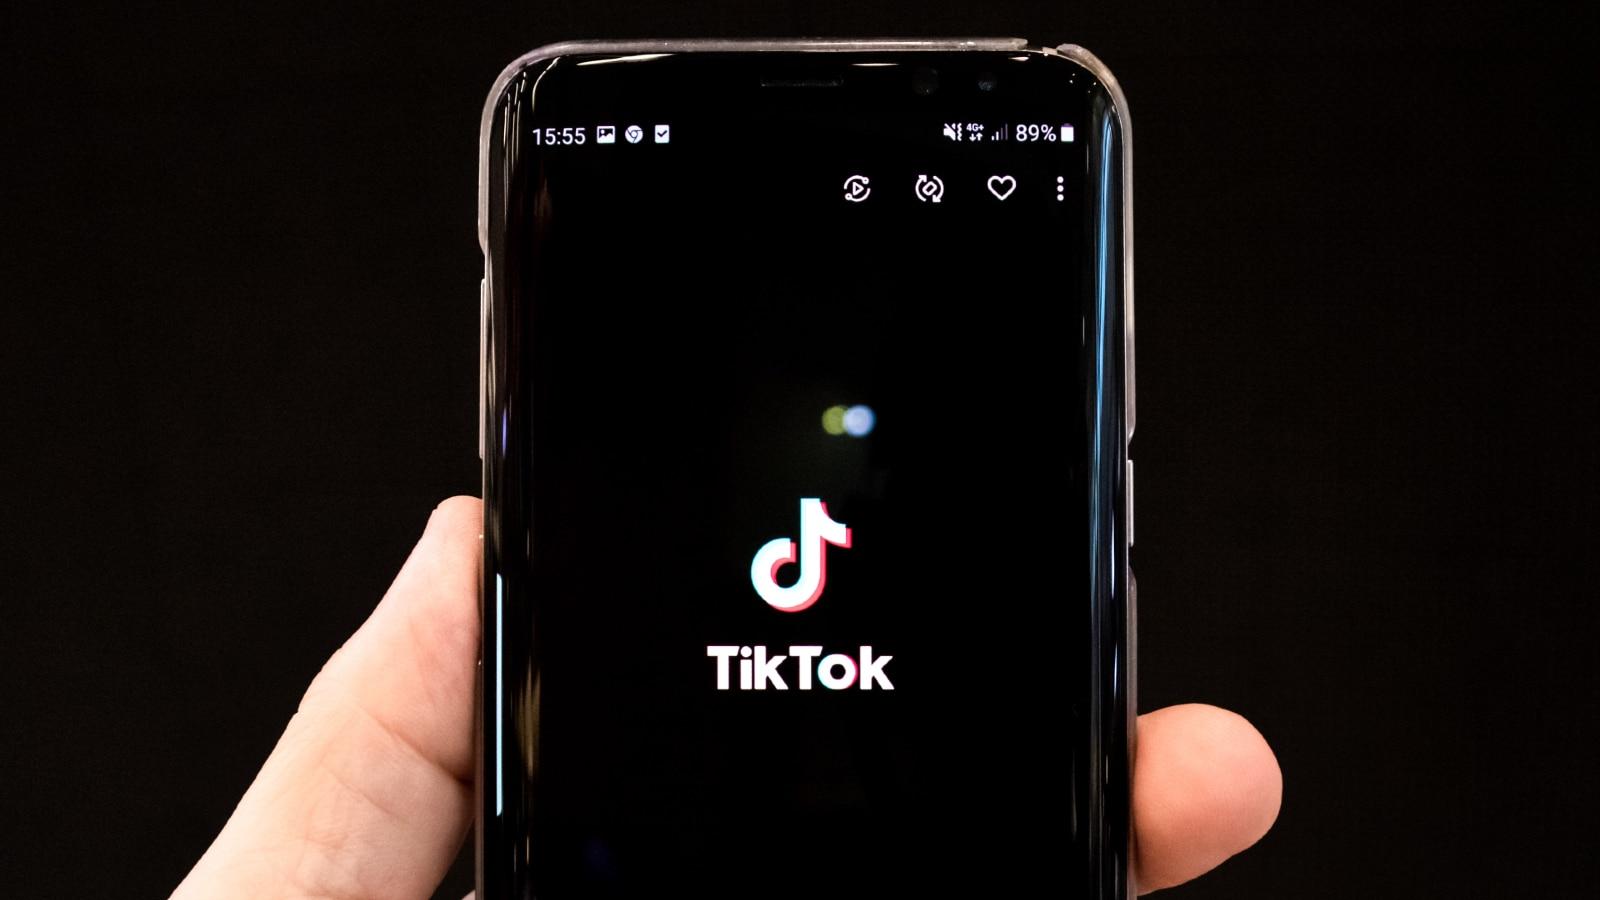 How to Login TikTok Lite App on Phone? 